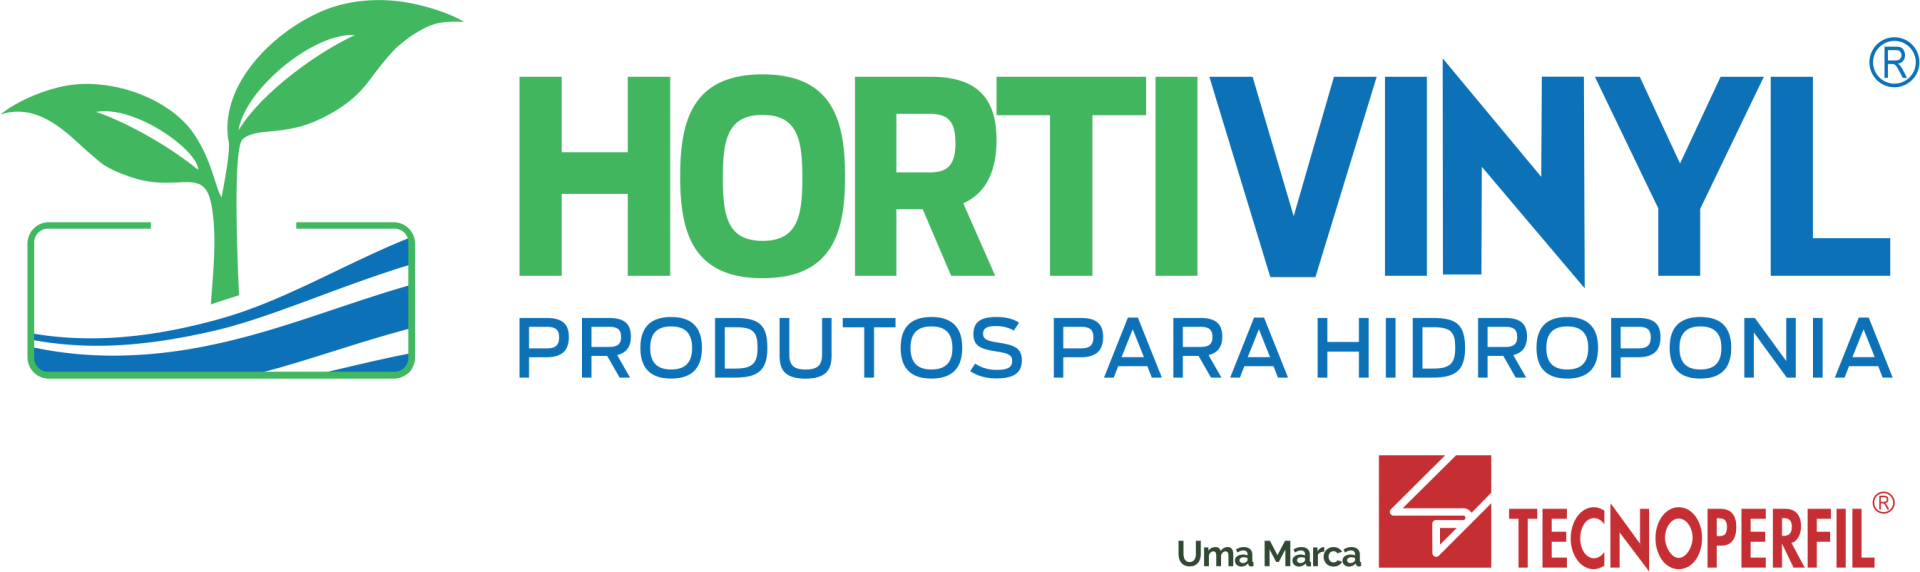 Logomarca Hortivinyl 2021 Nacional